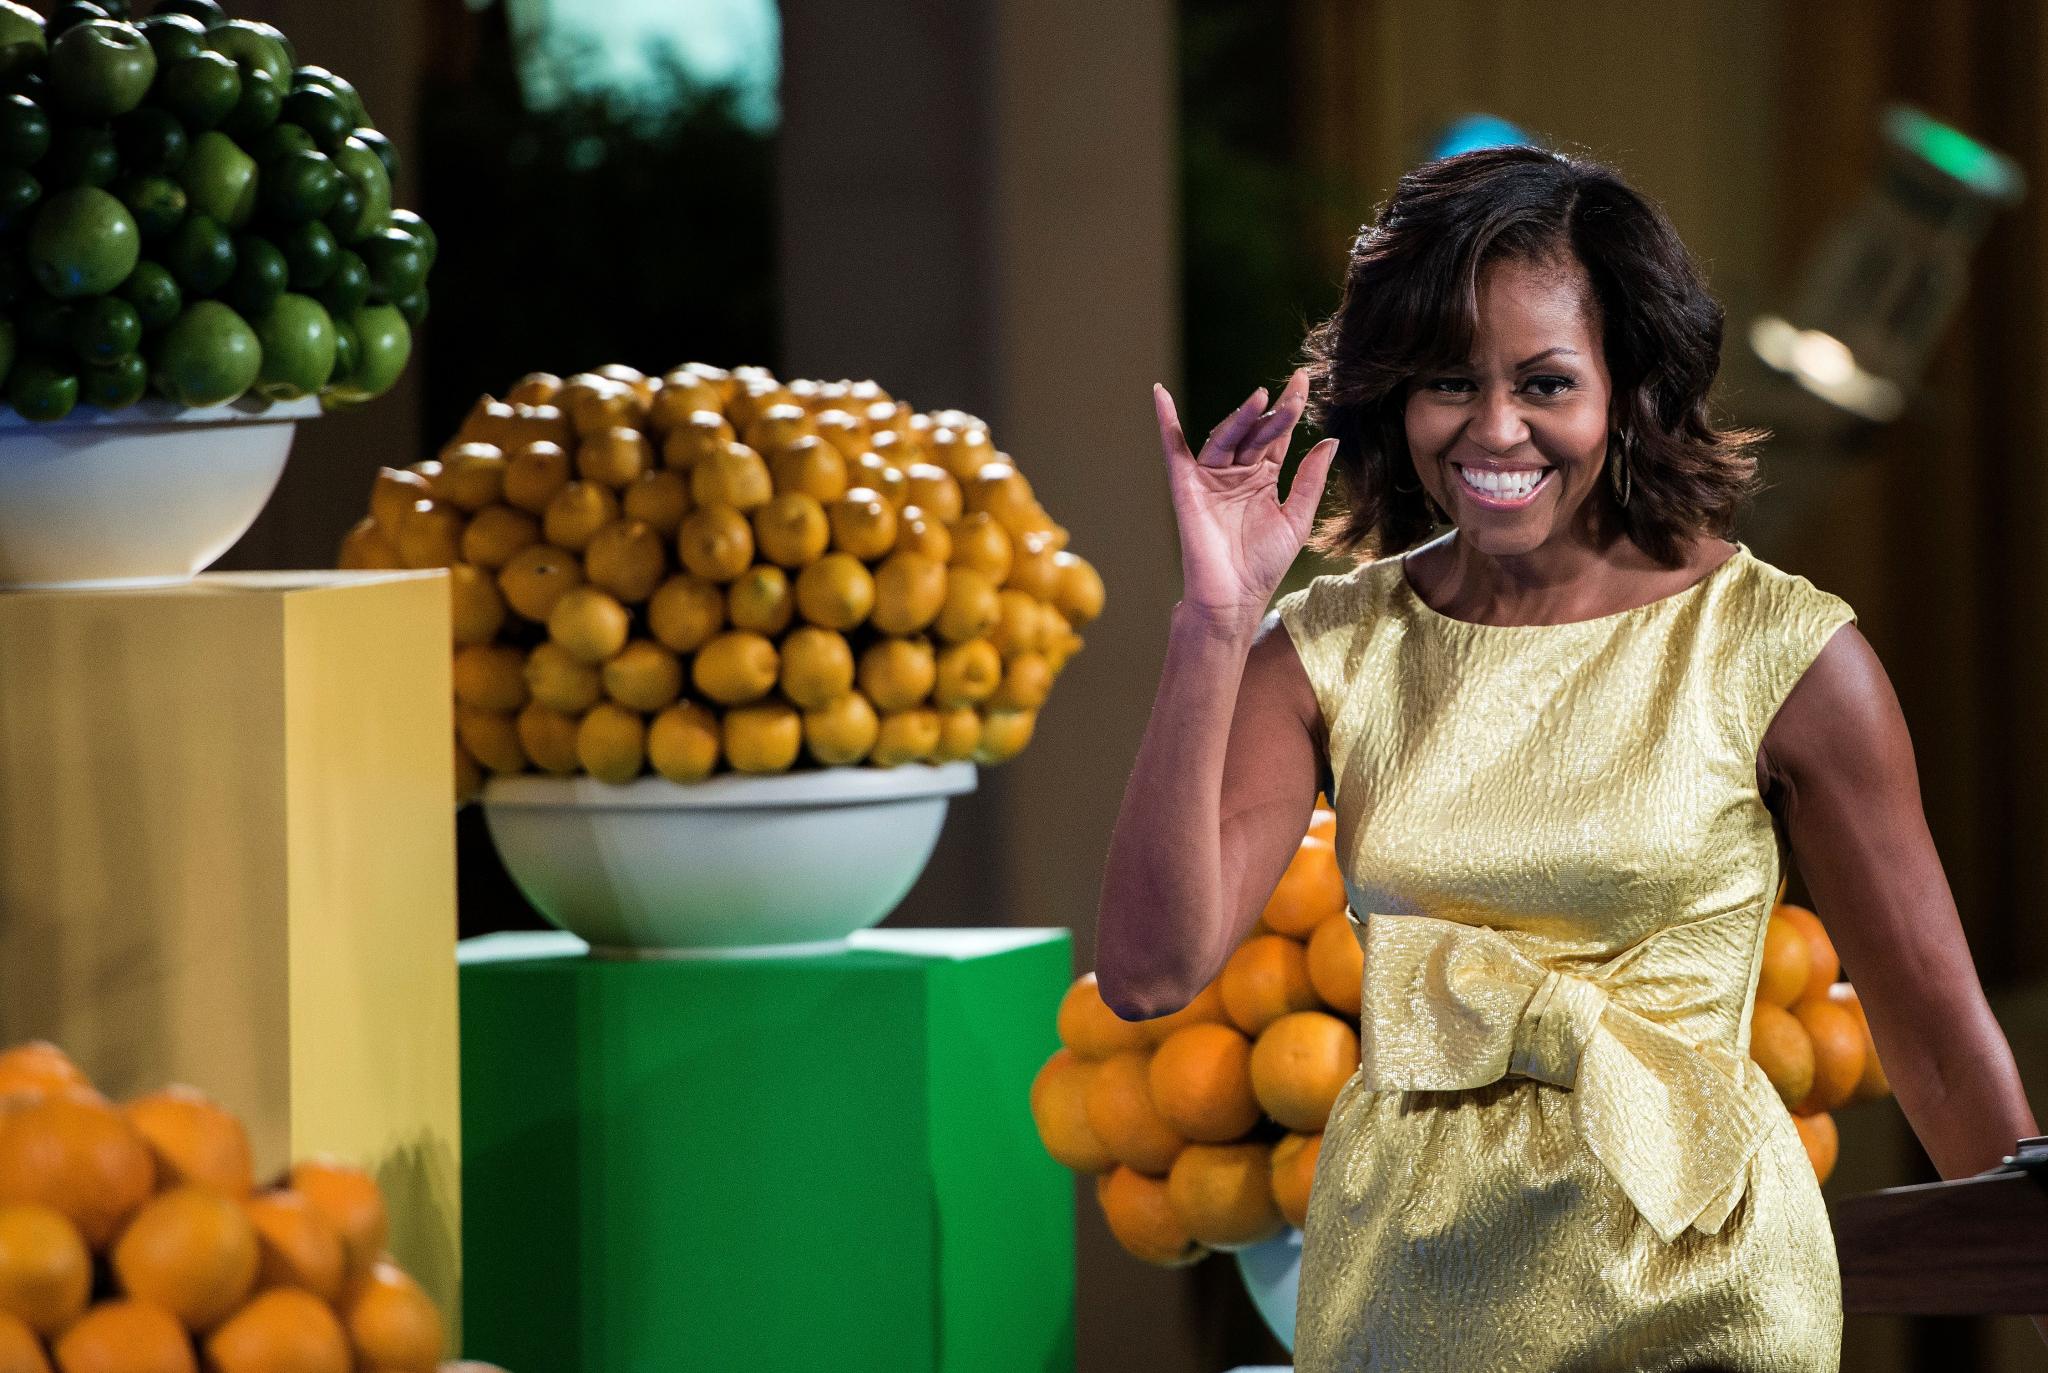 Michelle Obama Hosts Kids State Dinner